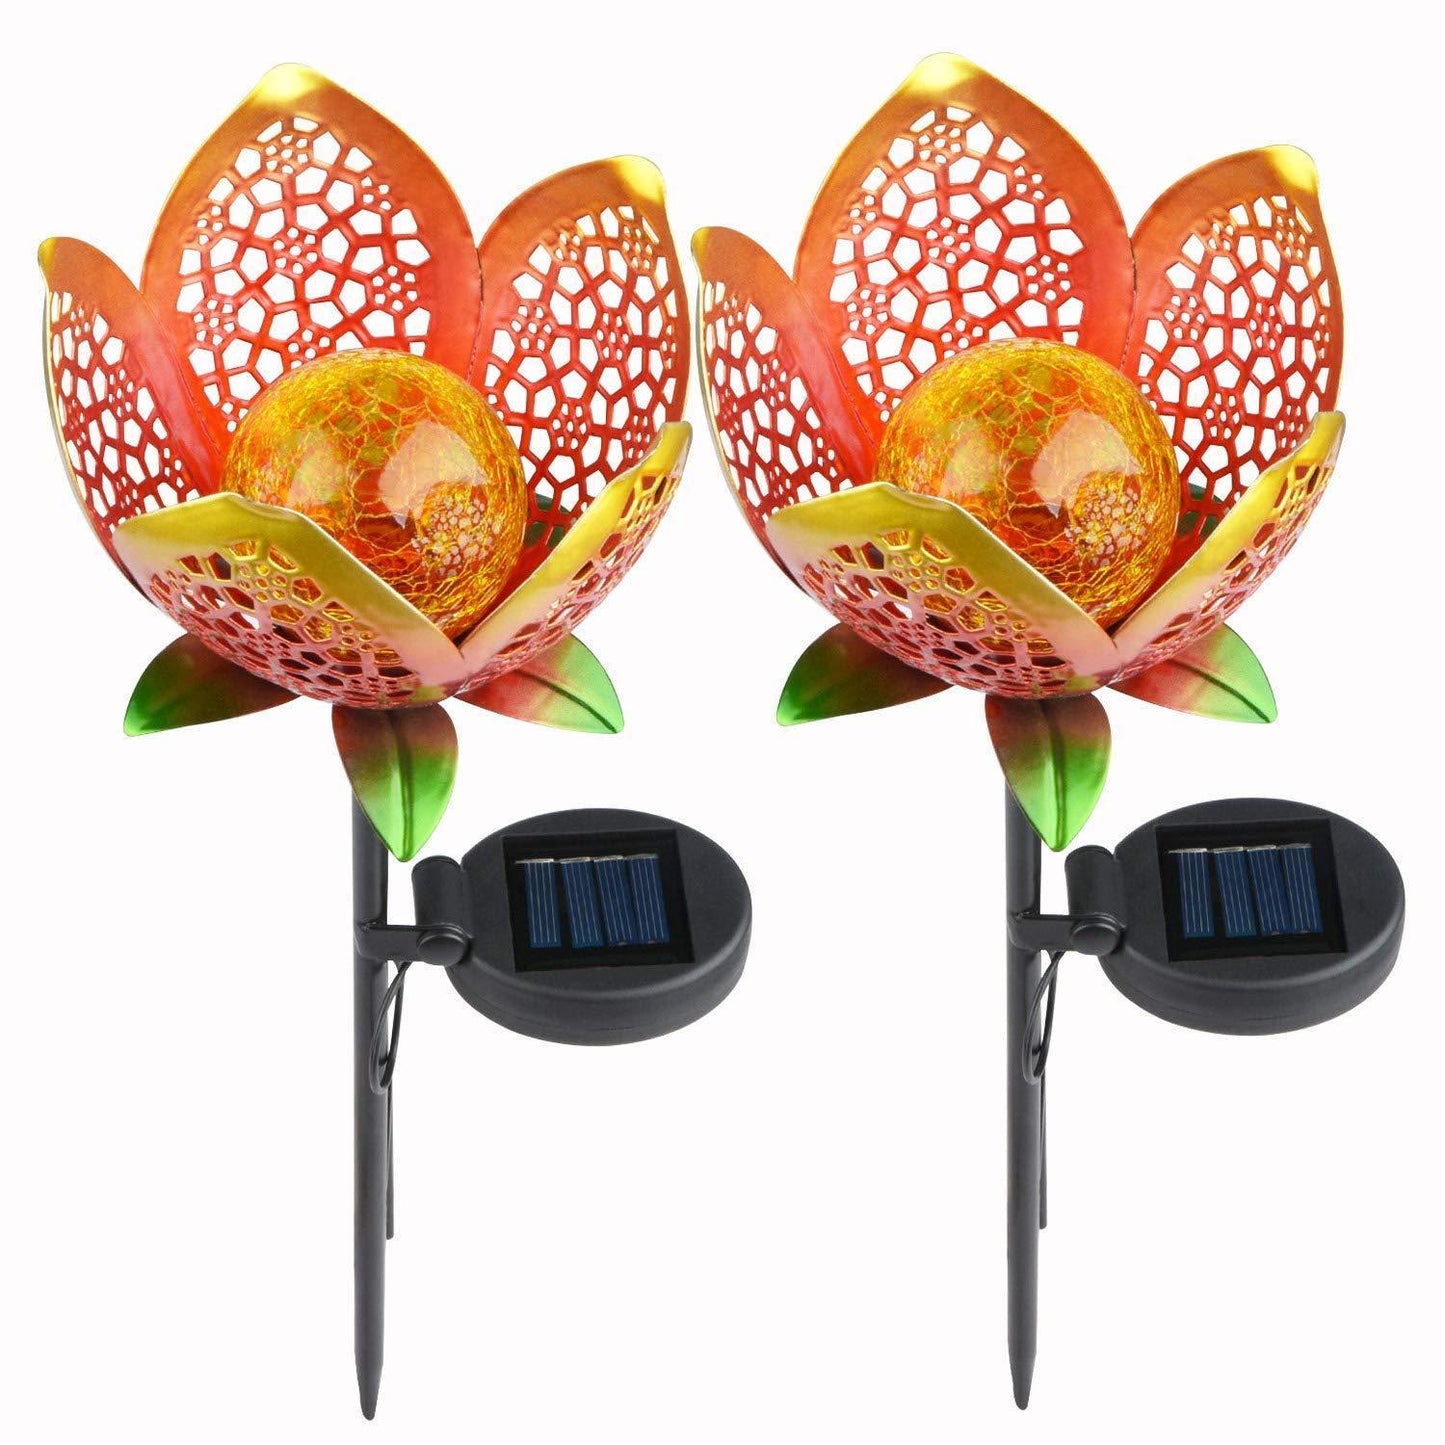  Solar Powered Flower Stake Garden Light sold by Fleurlovin, Free Shipping Worldwide